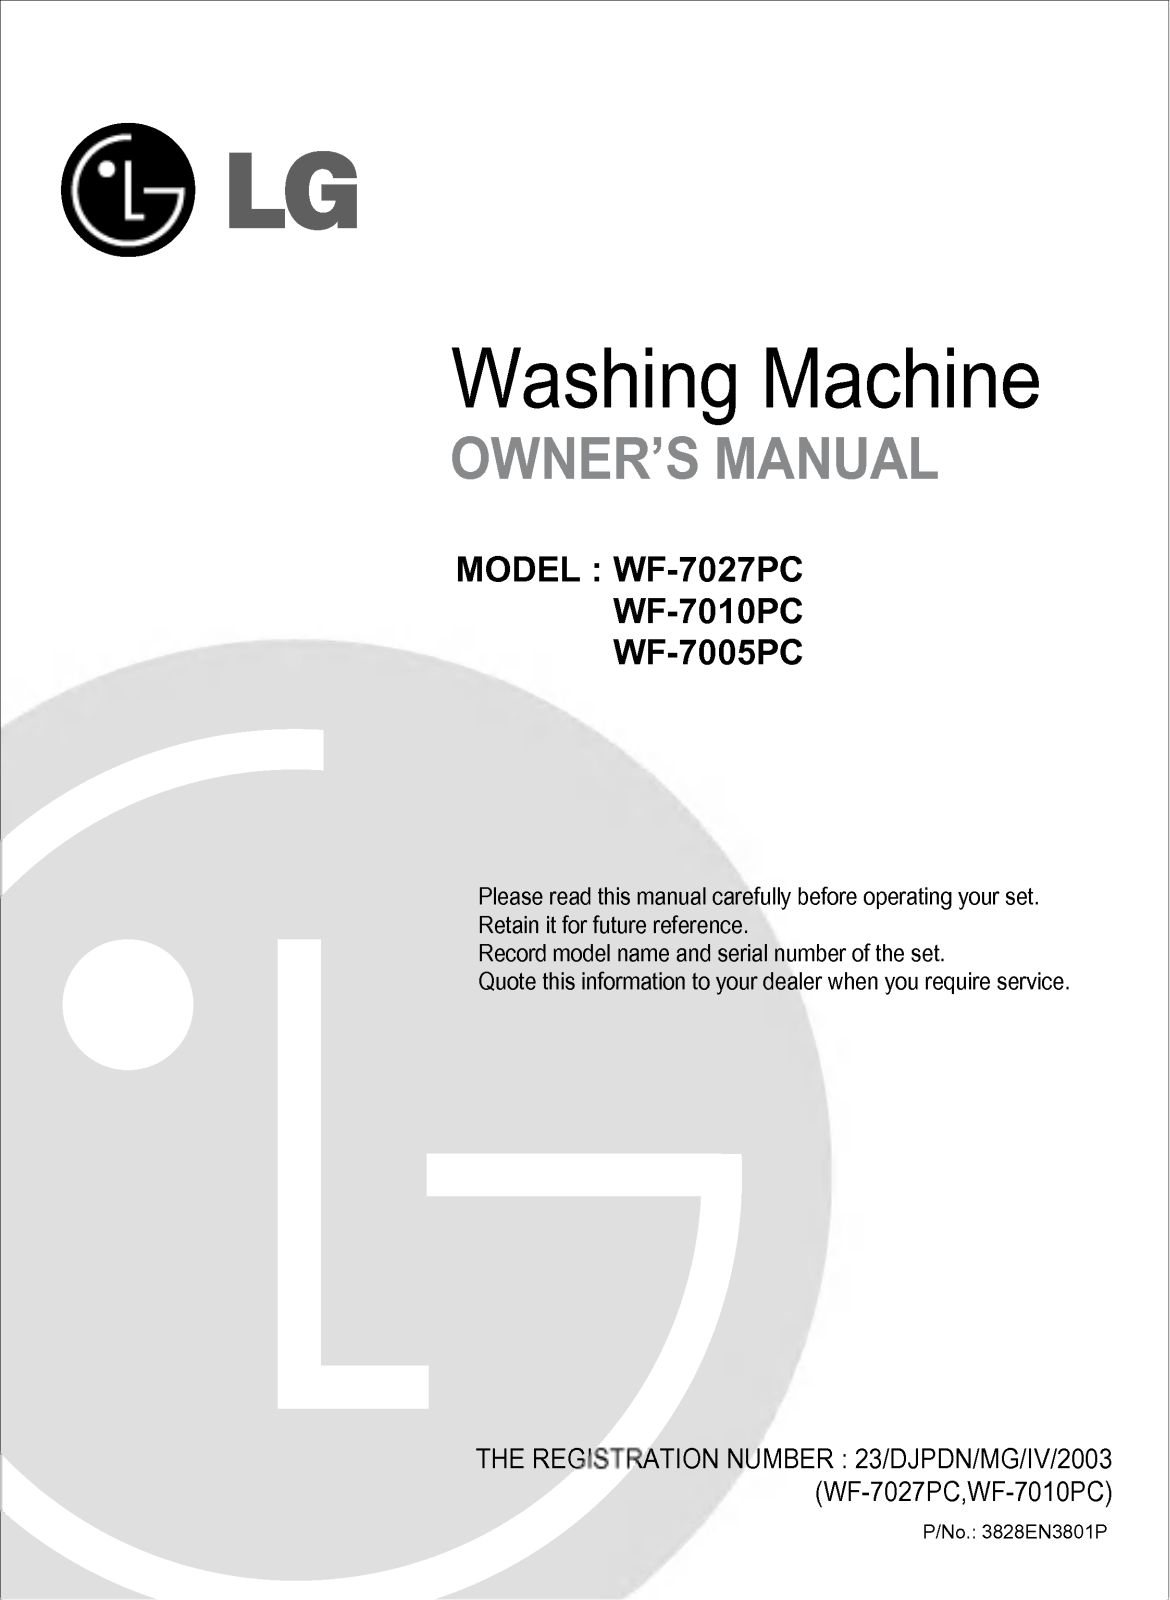 LG WF-6241FPC Manual book